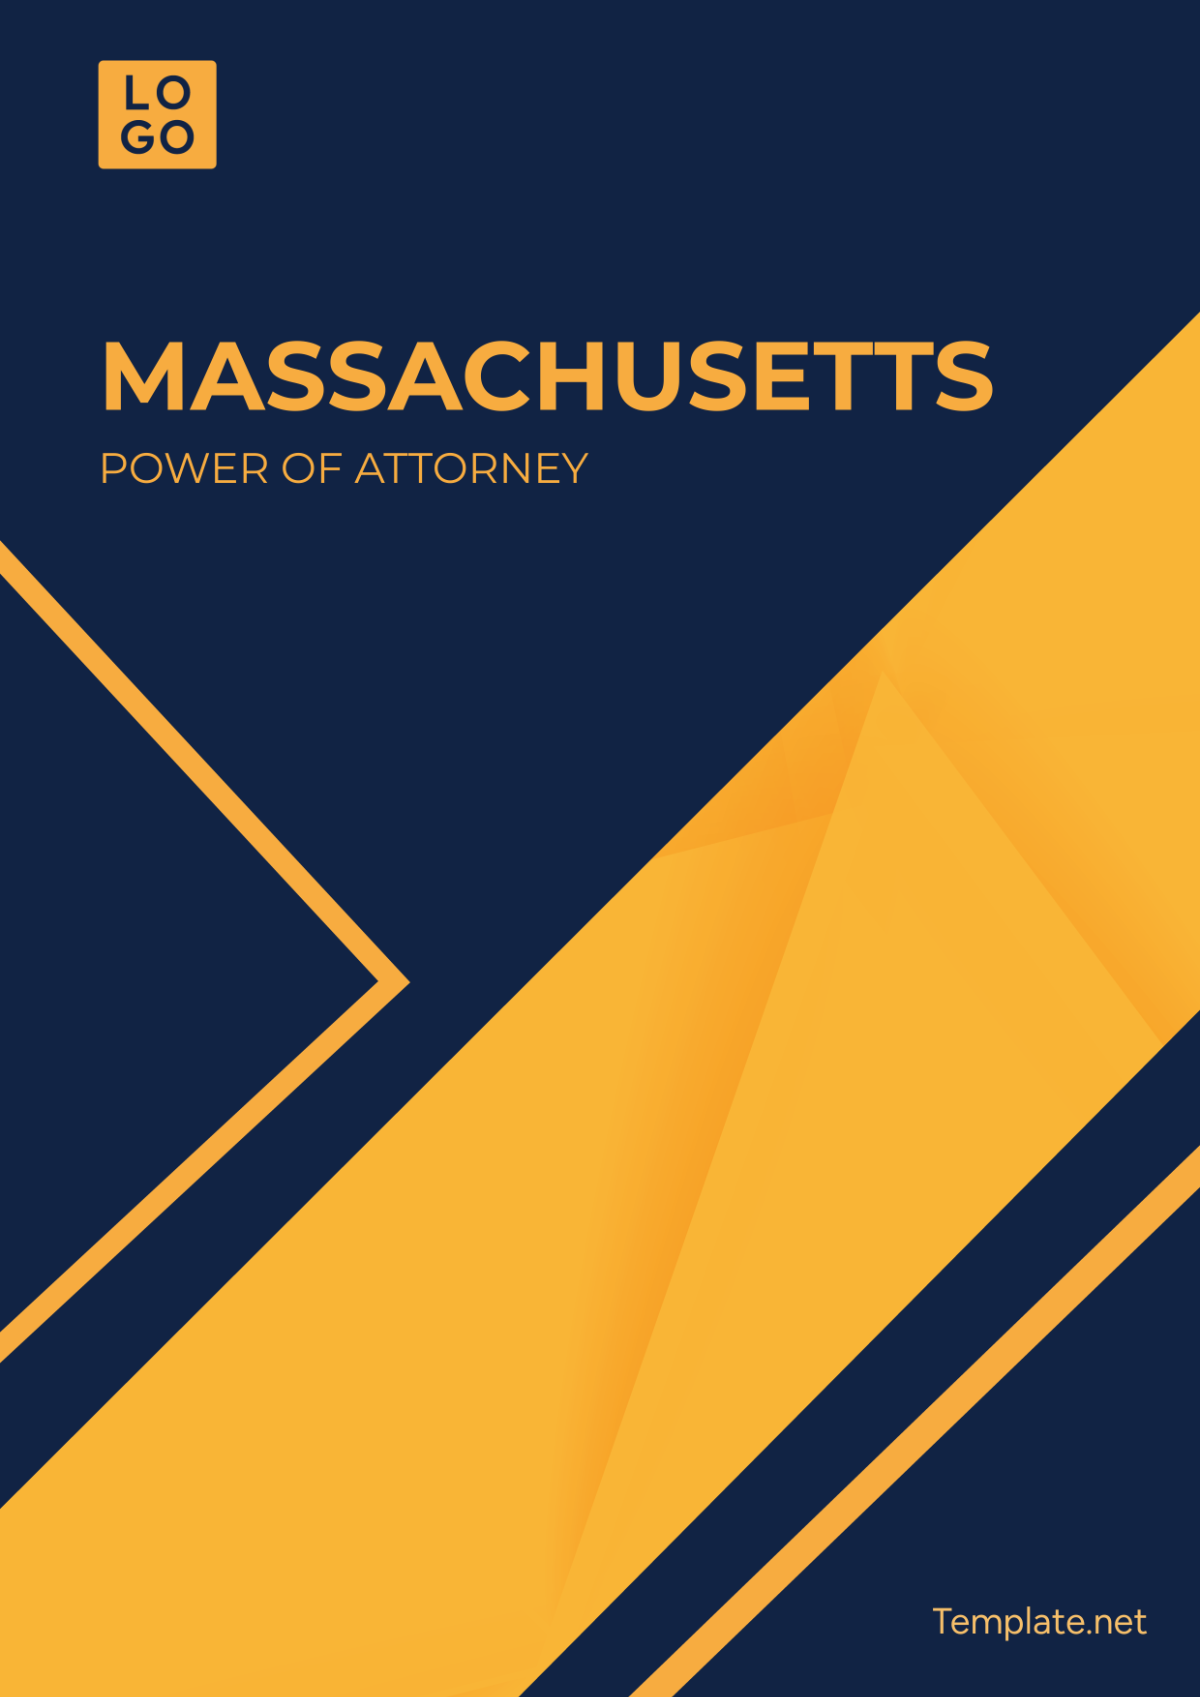 Massachusetts Power of Attorney Template